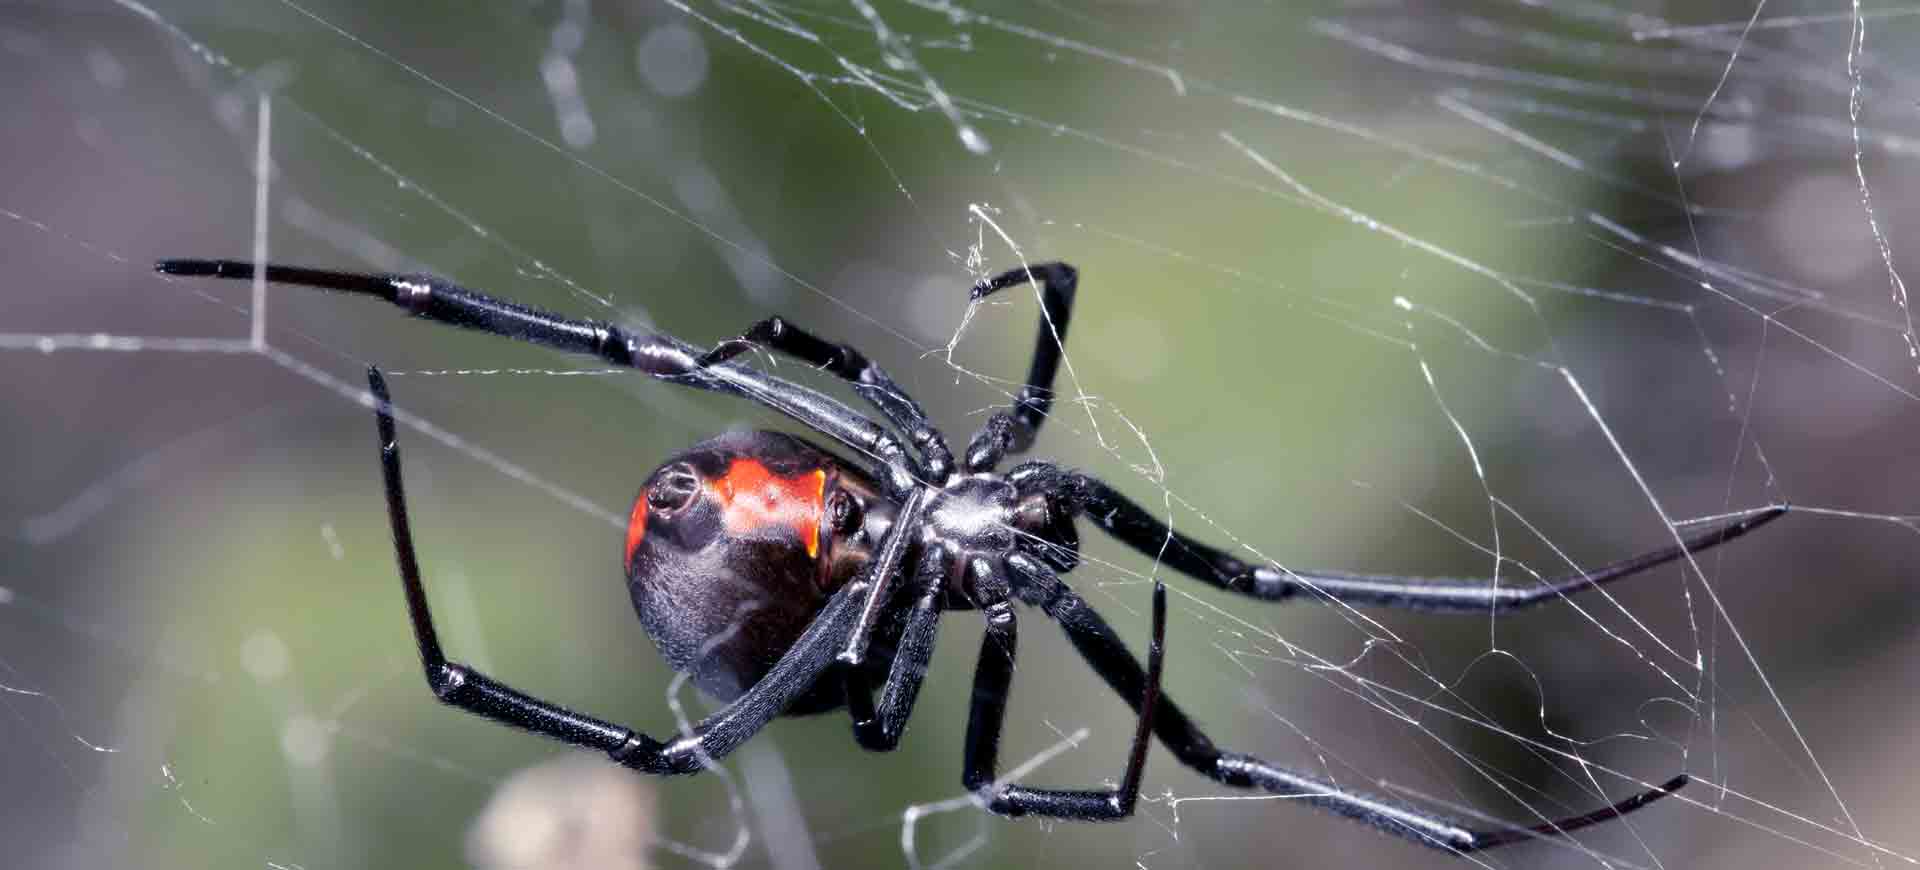 spider pest control clairemont